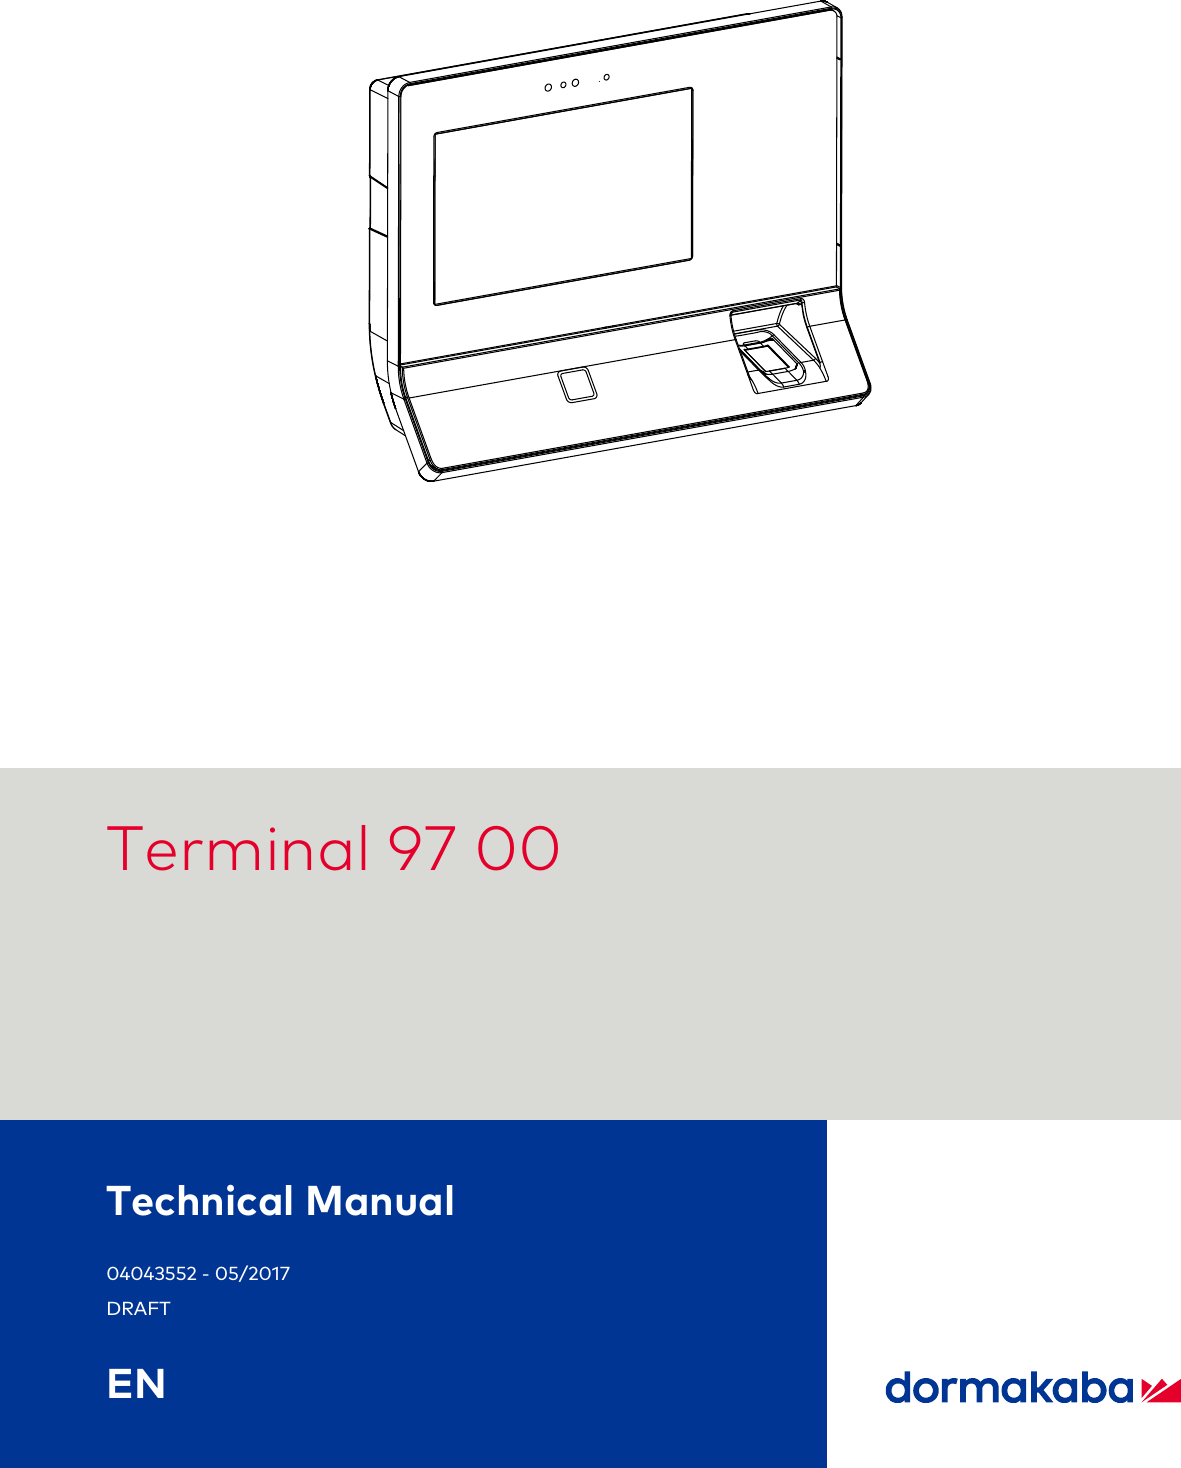 Terminal 97 0004043552 - 05/2017DRAFTENTechnical Manual